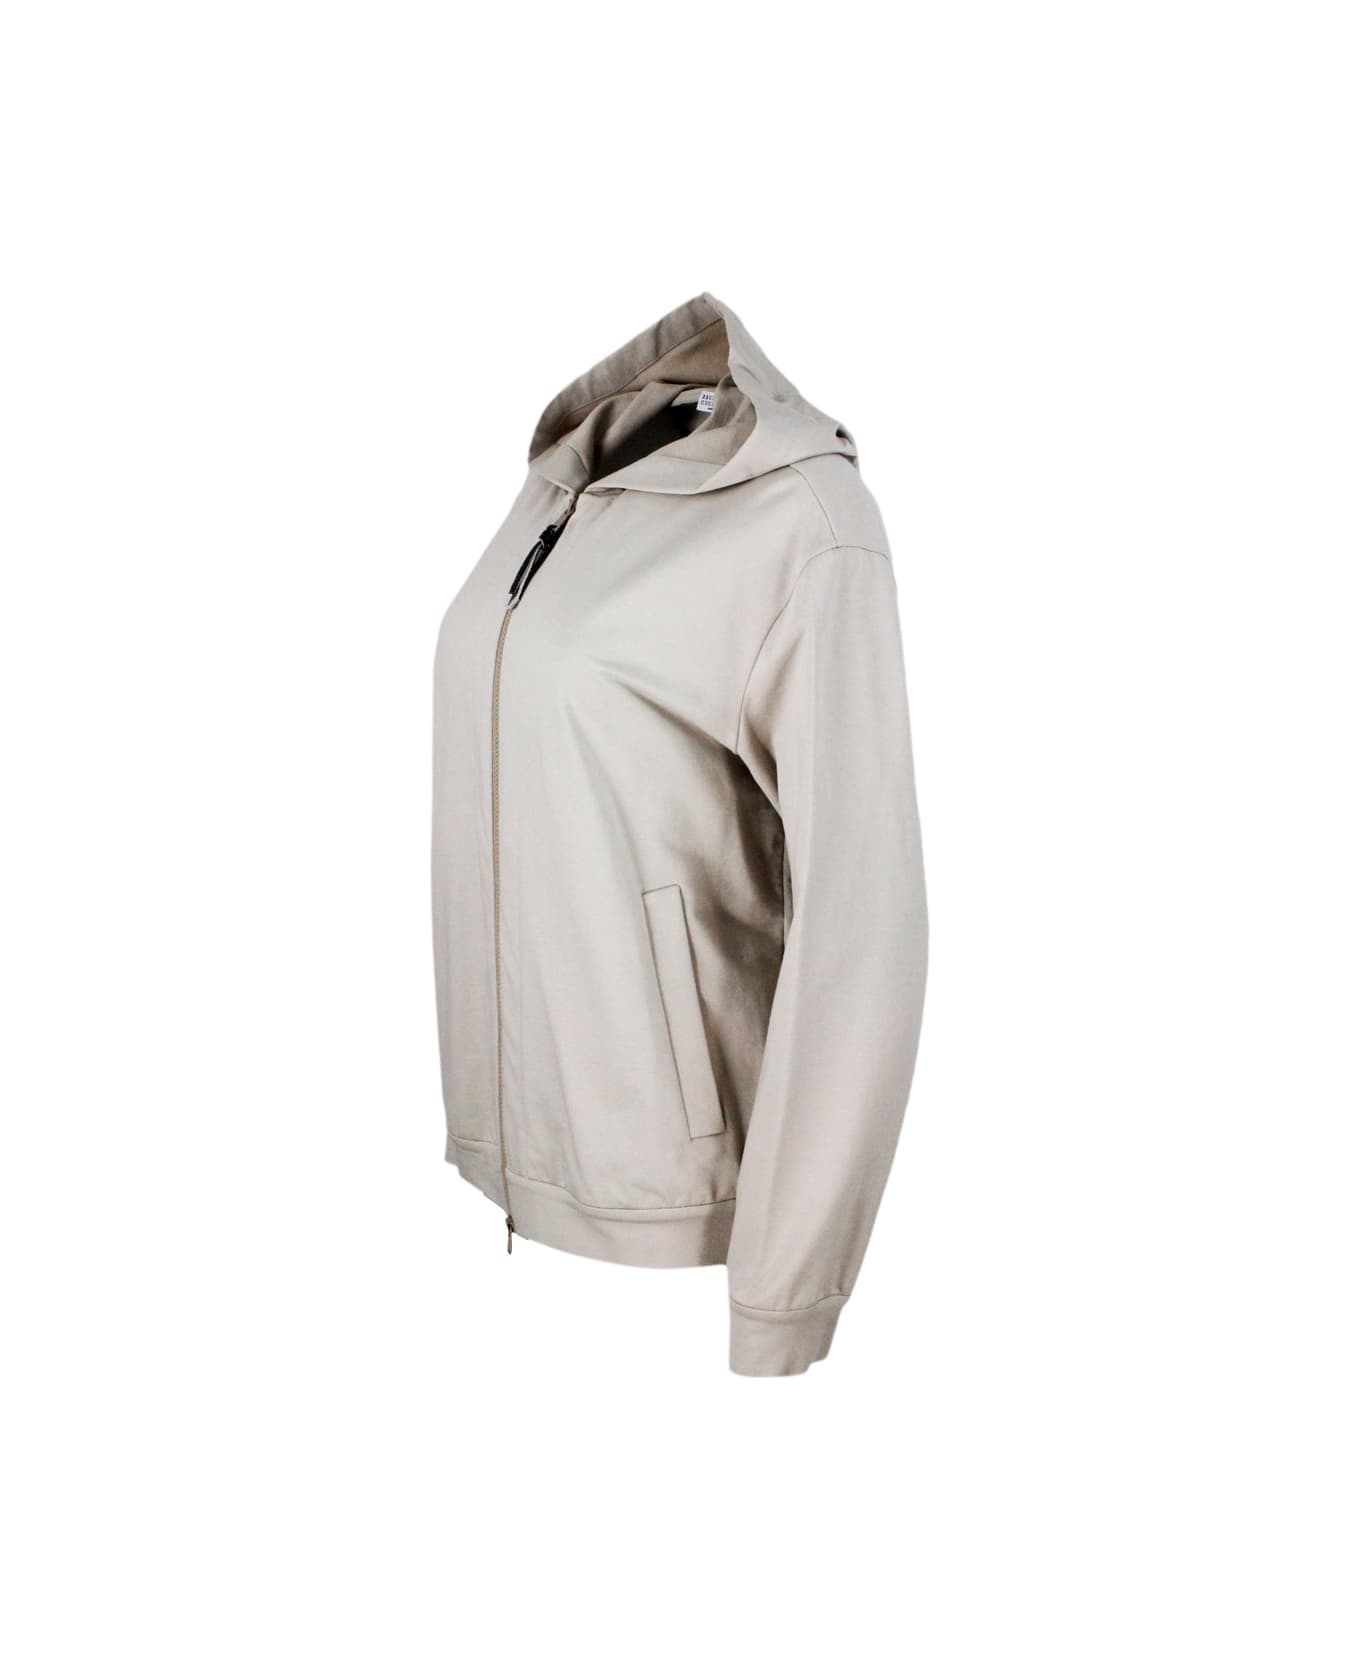 Brunello Cucinelli Stretch Cotton Sweatshirt With Hood And Jewel On The Zip Puller - Beige